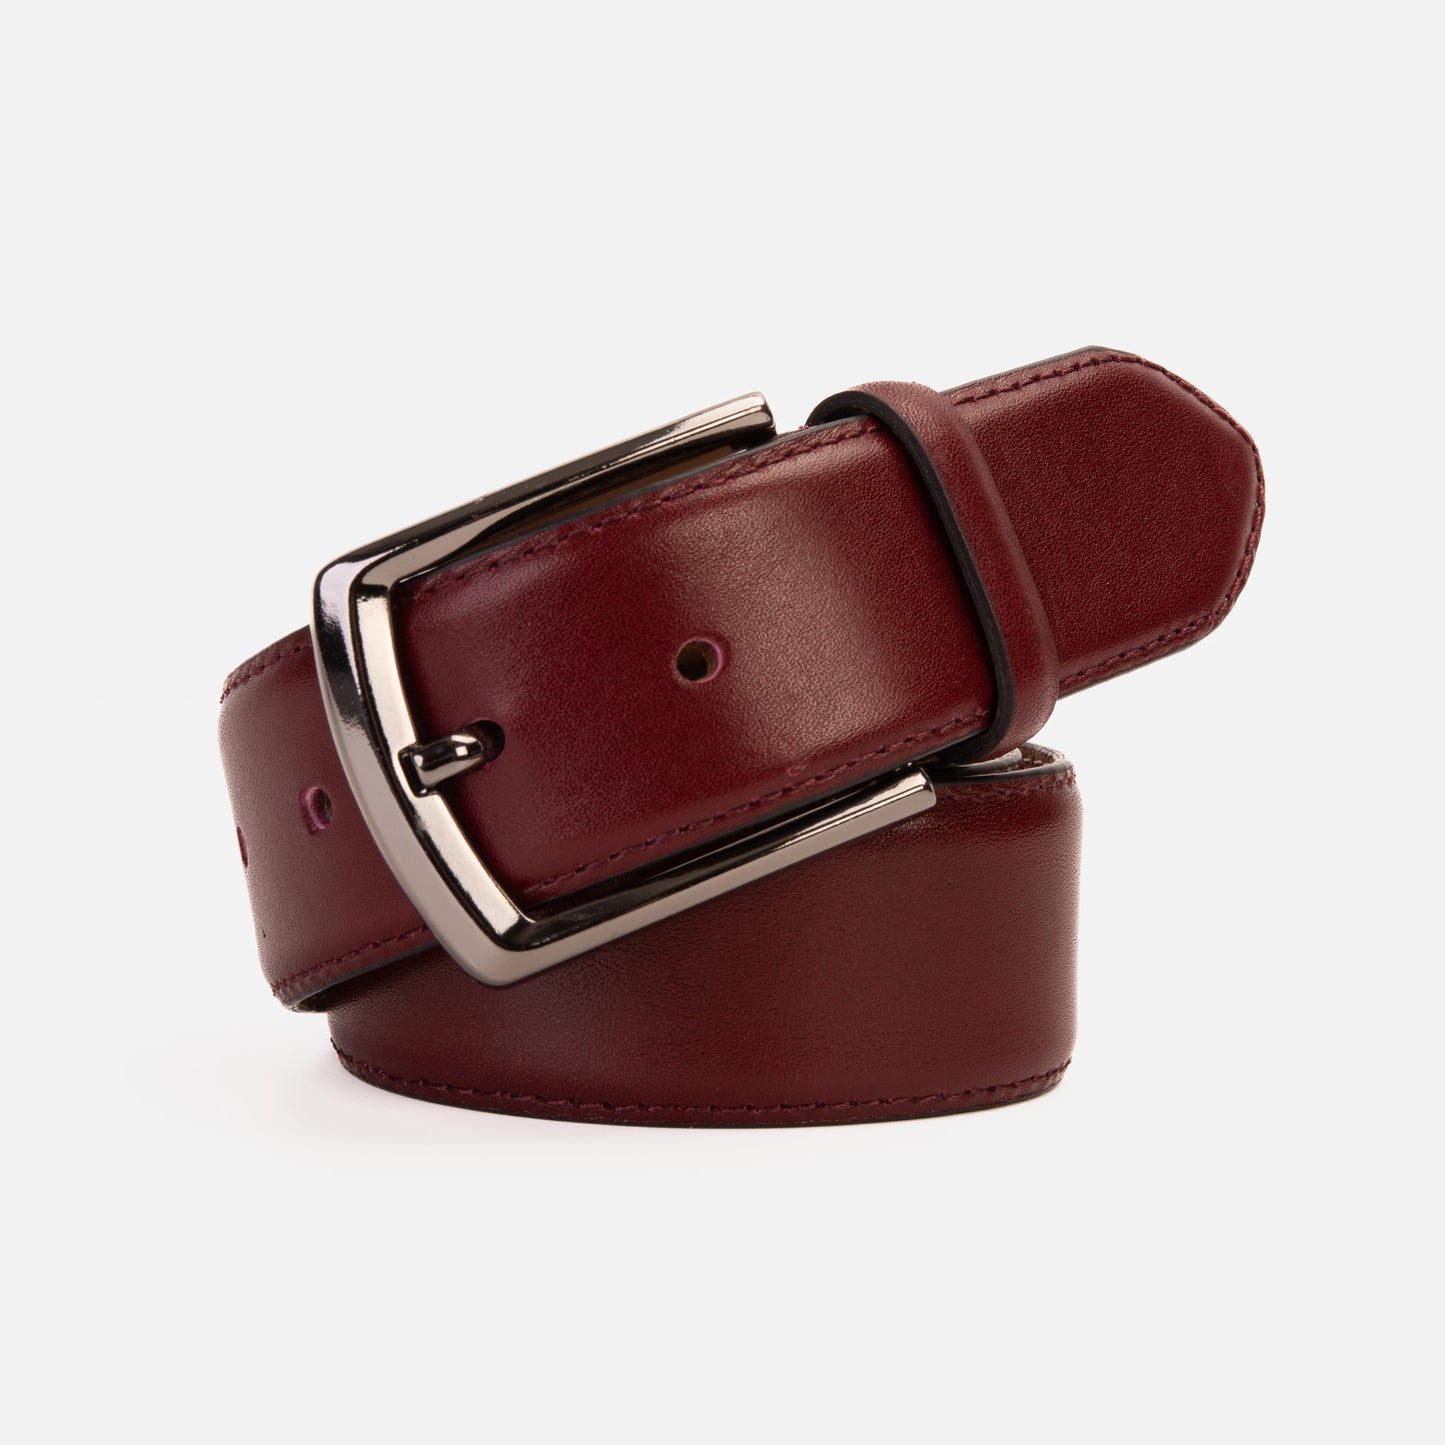 The Royal Hand Craft Burgundy Leather Belt